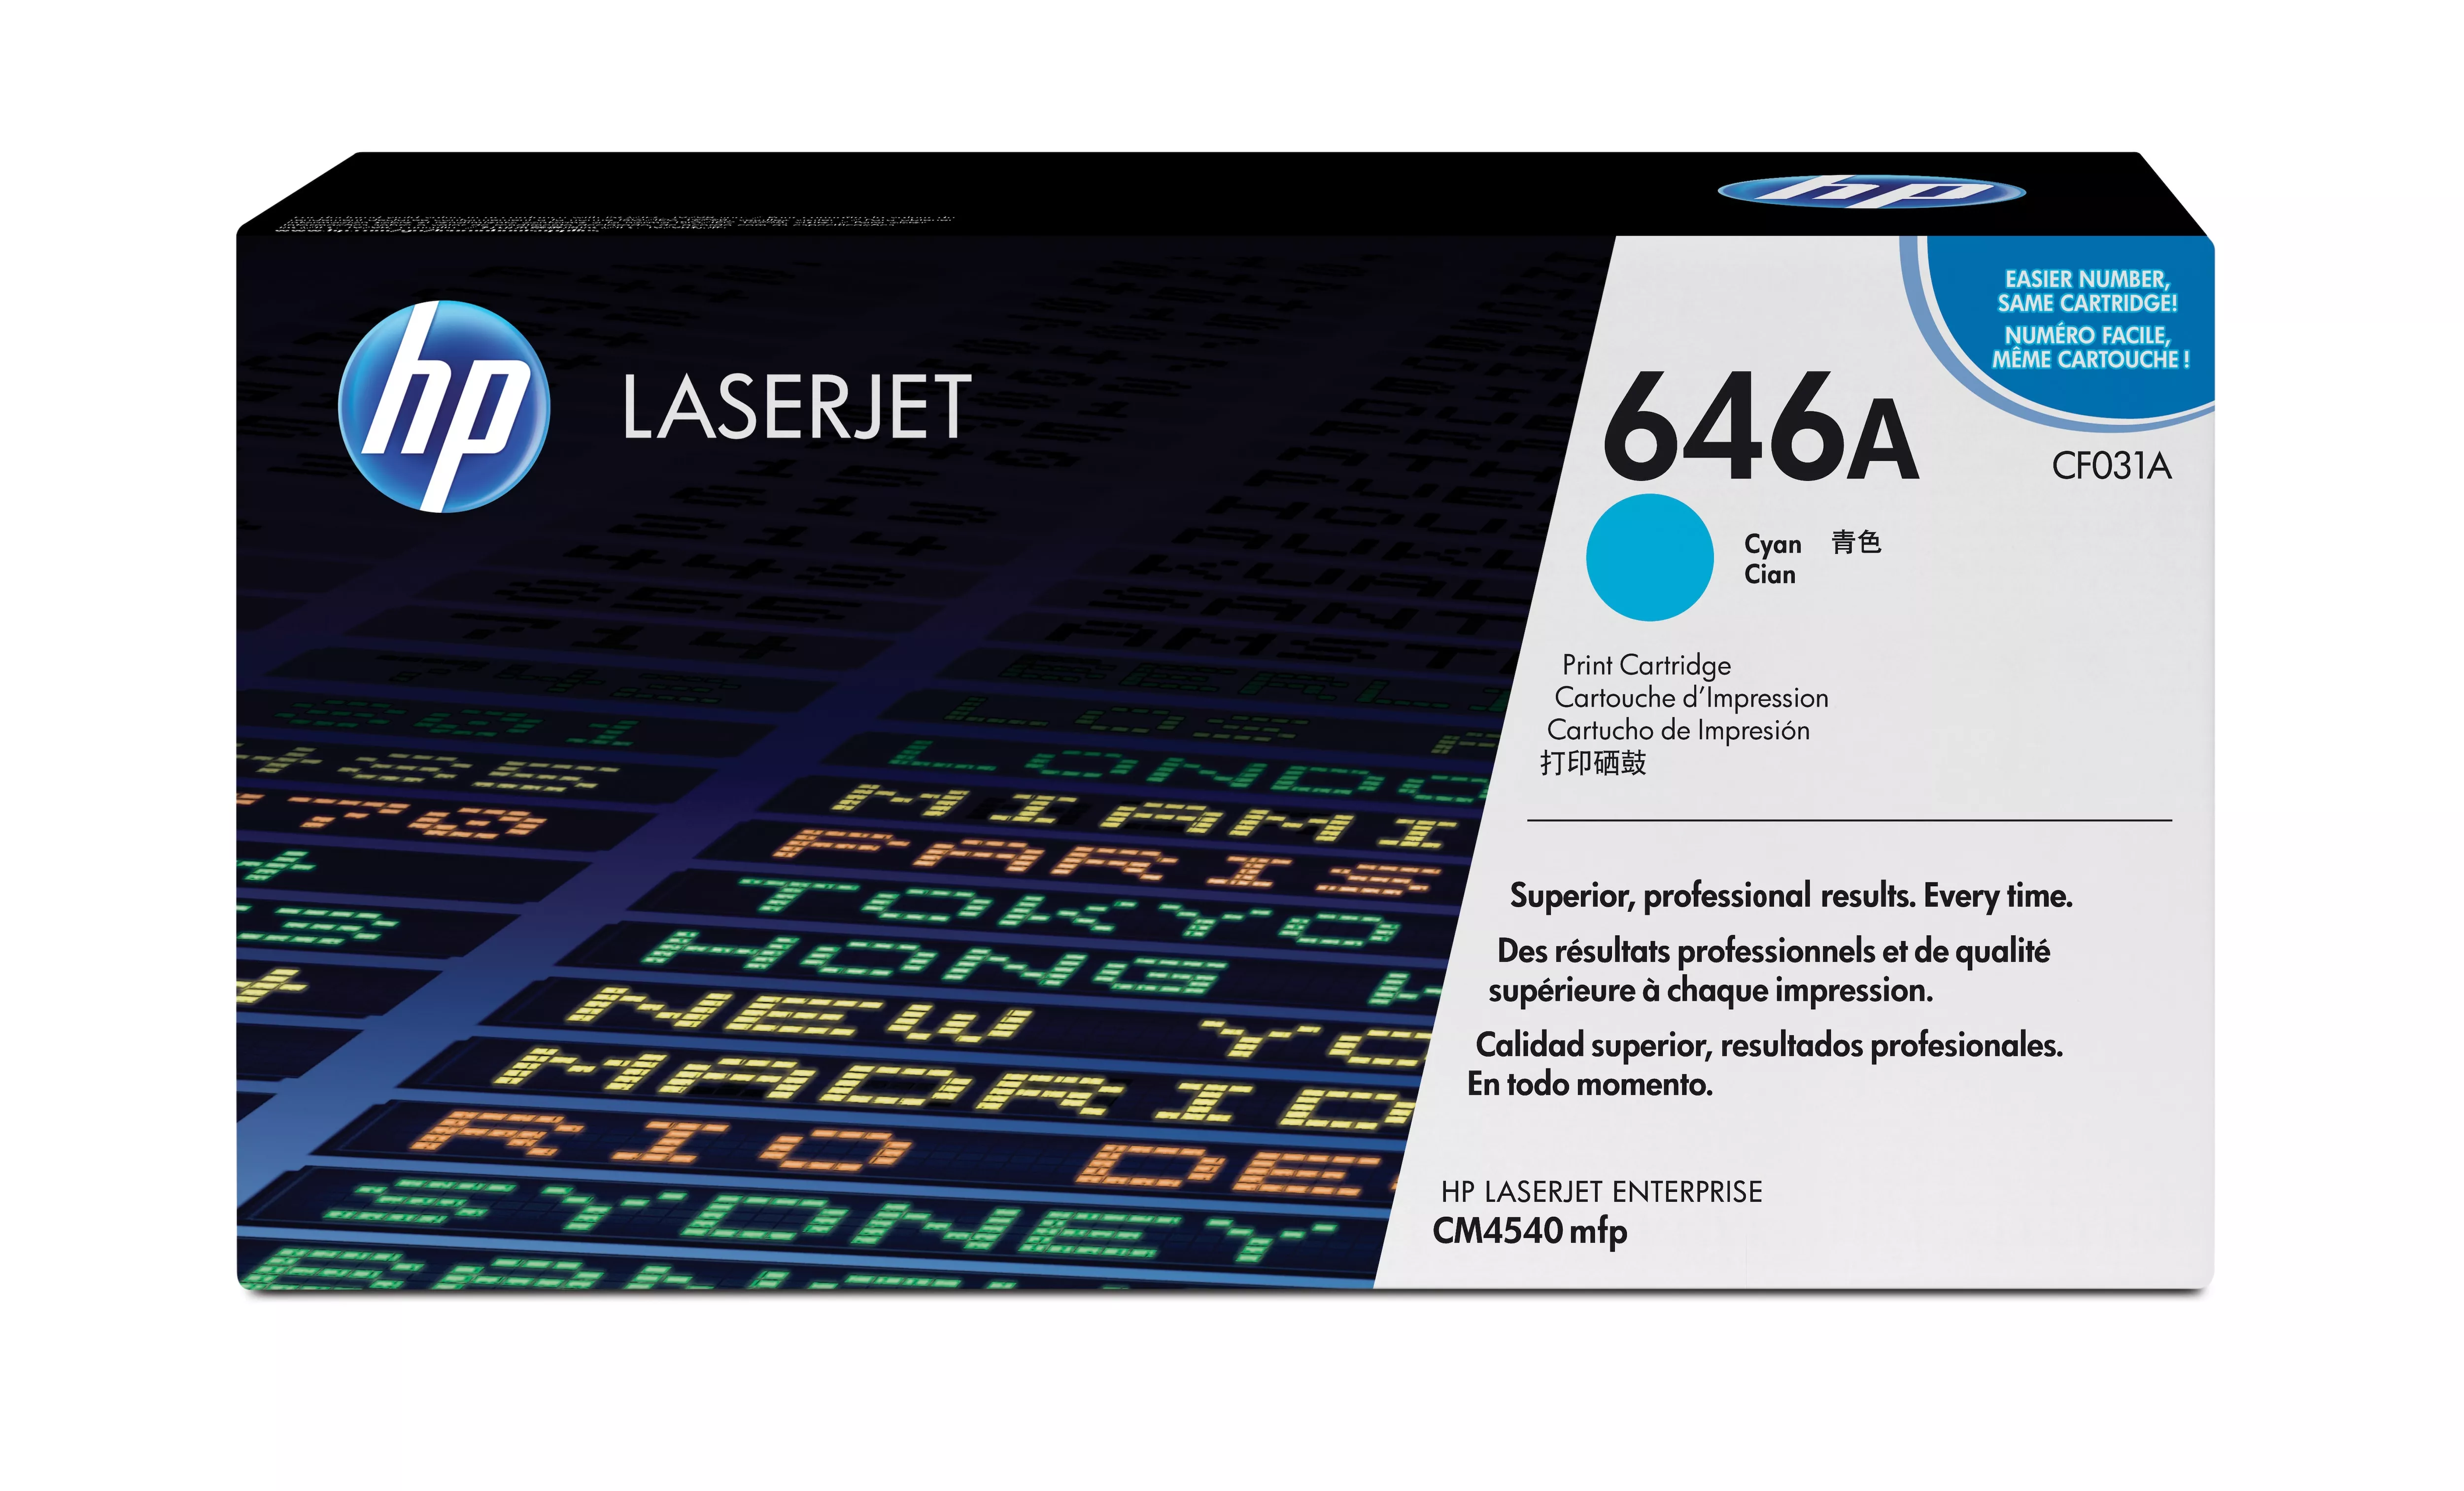 Achat HP original Colour LaserJet CF031A Toner cartridge cyan au meilleur prix